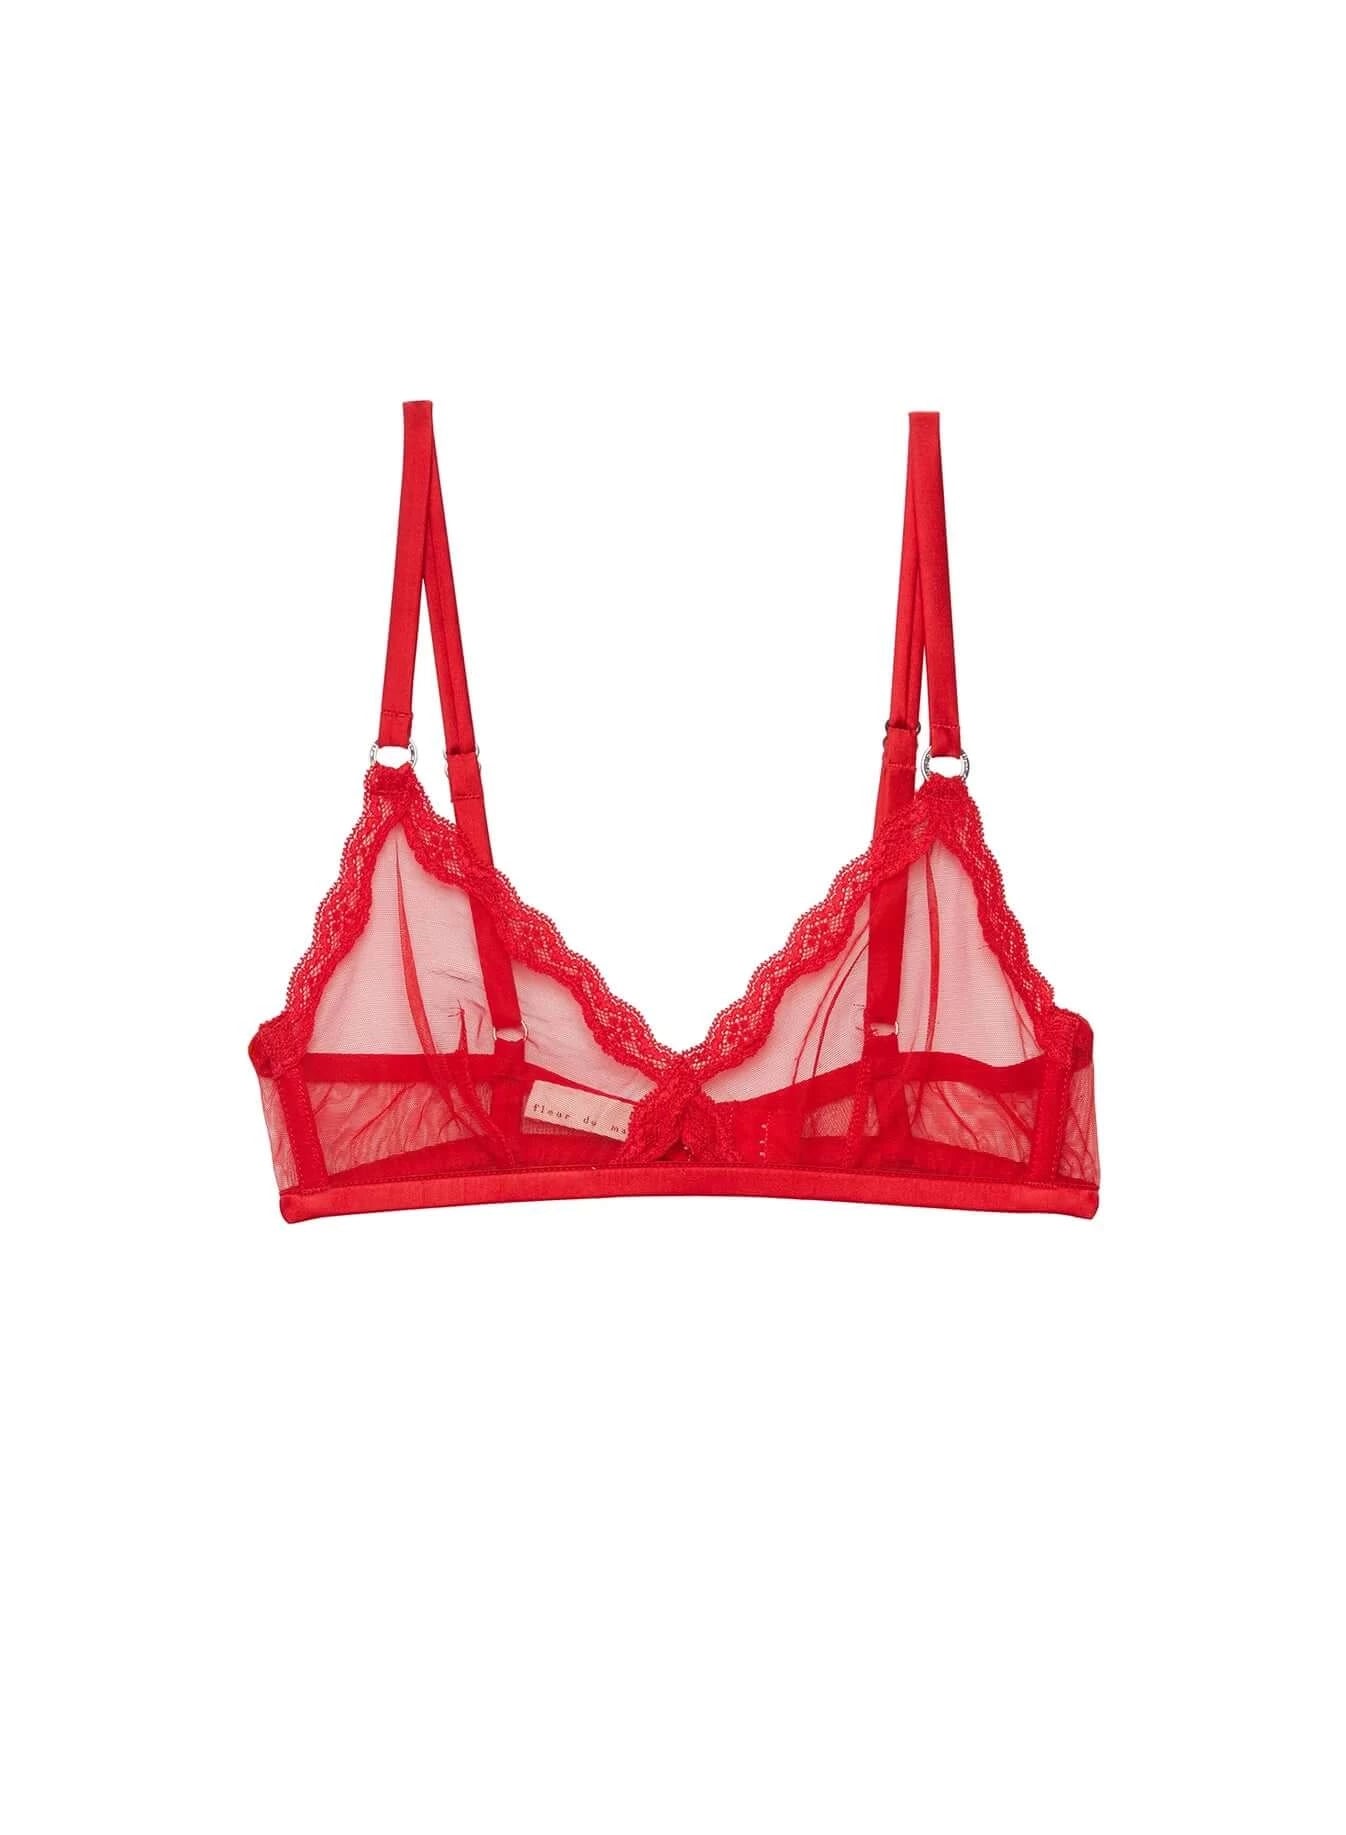 Intimates & Sleepwear, Red Full Coverage Lace Pushup Demi Bra 36c